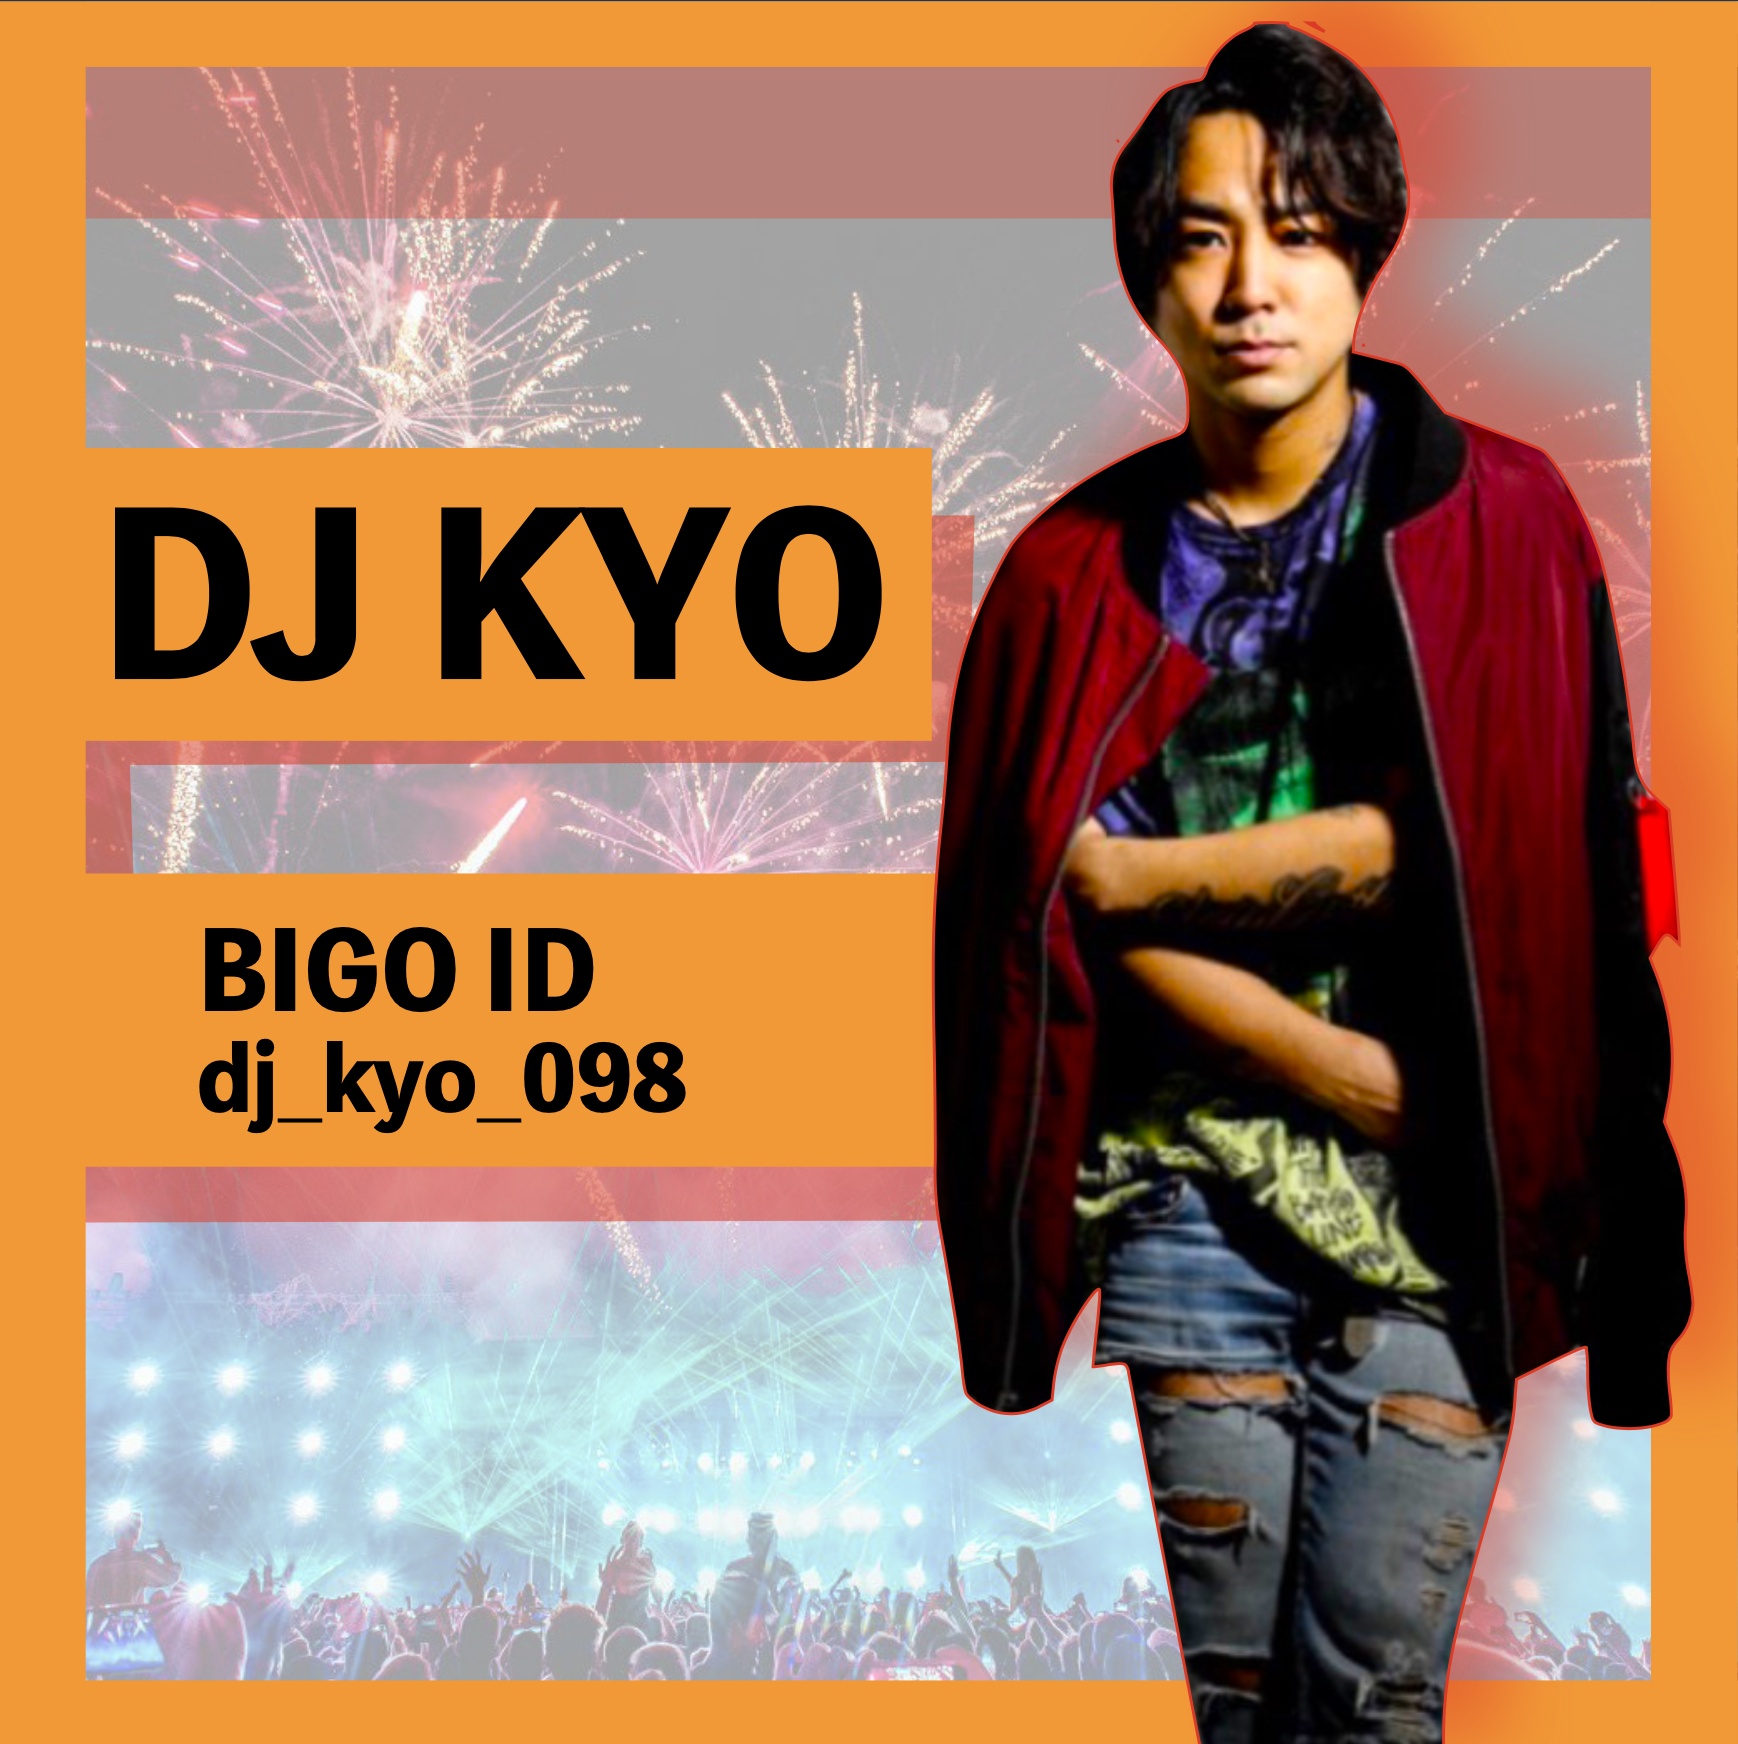 DJ KYO